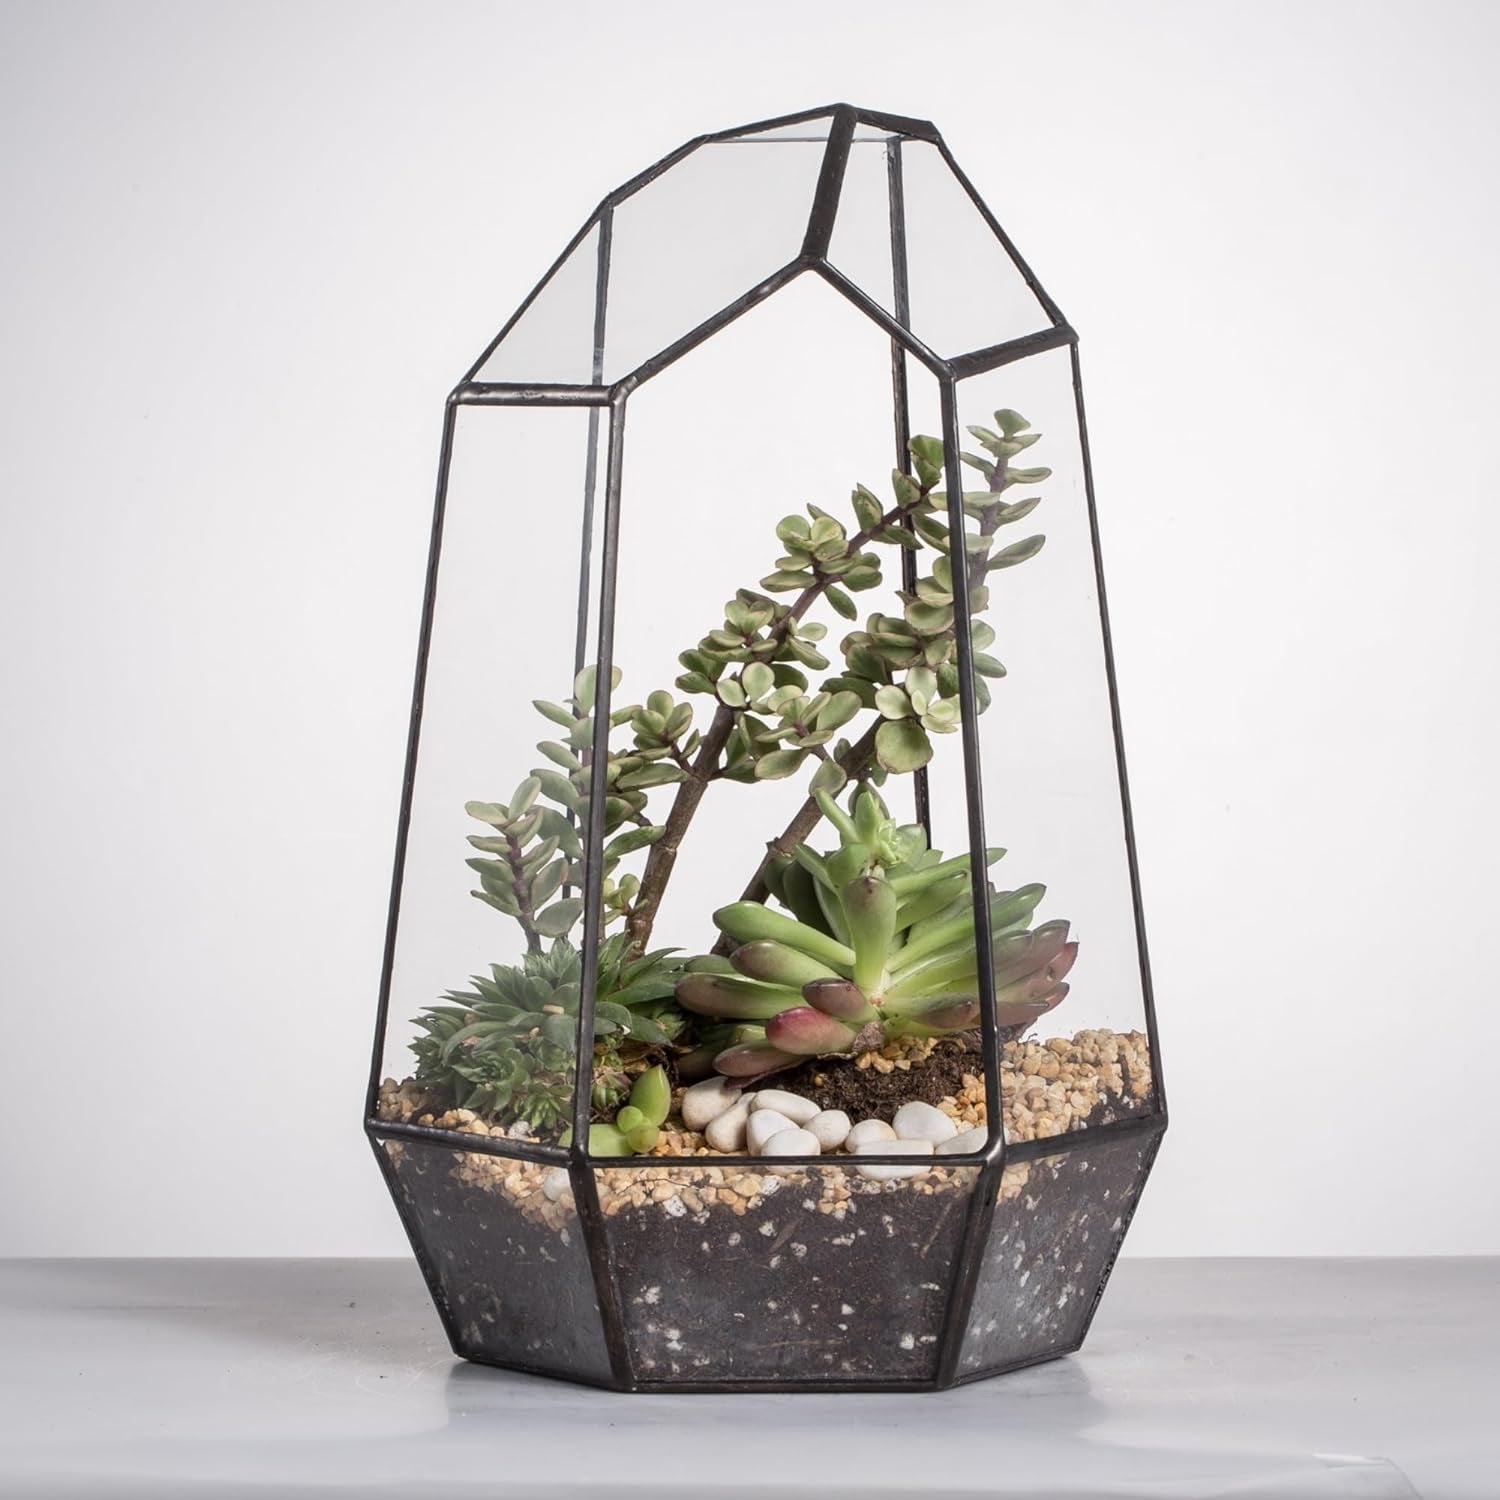 Geometric Plants Terrarium Planter - Glass Terrarium for Succulent, Cacti - 6.5X5.7X9.8 Inches - Indoor Tabletop Irregular Opened Container Pot for Home, Garden, Office Decor, Black (No Plants)